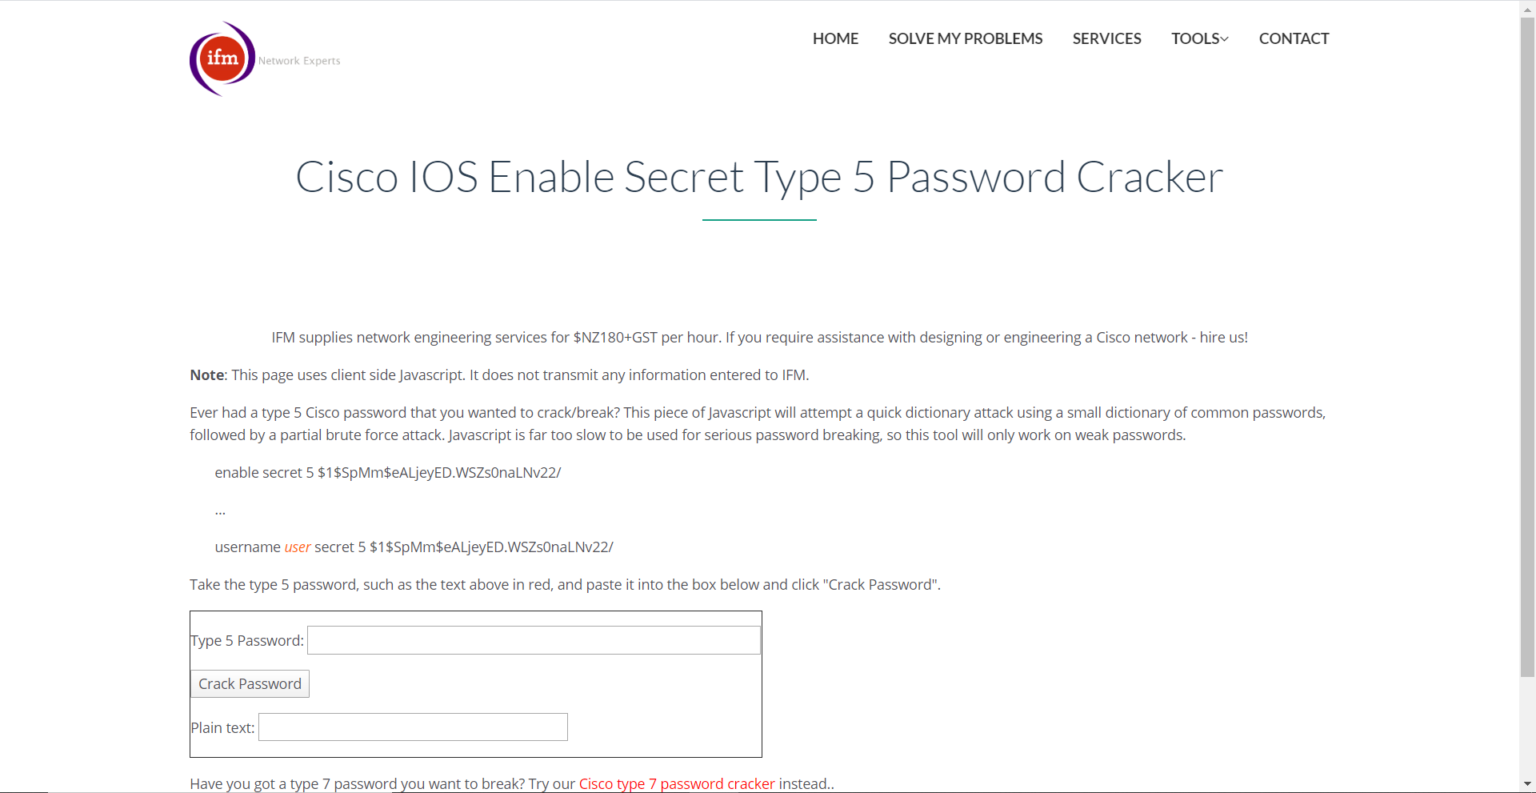 Enable secret 5 password decoder free